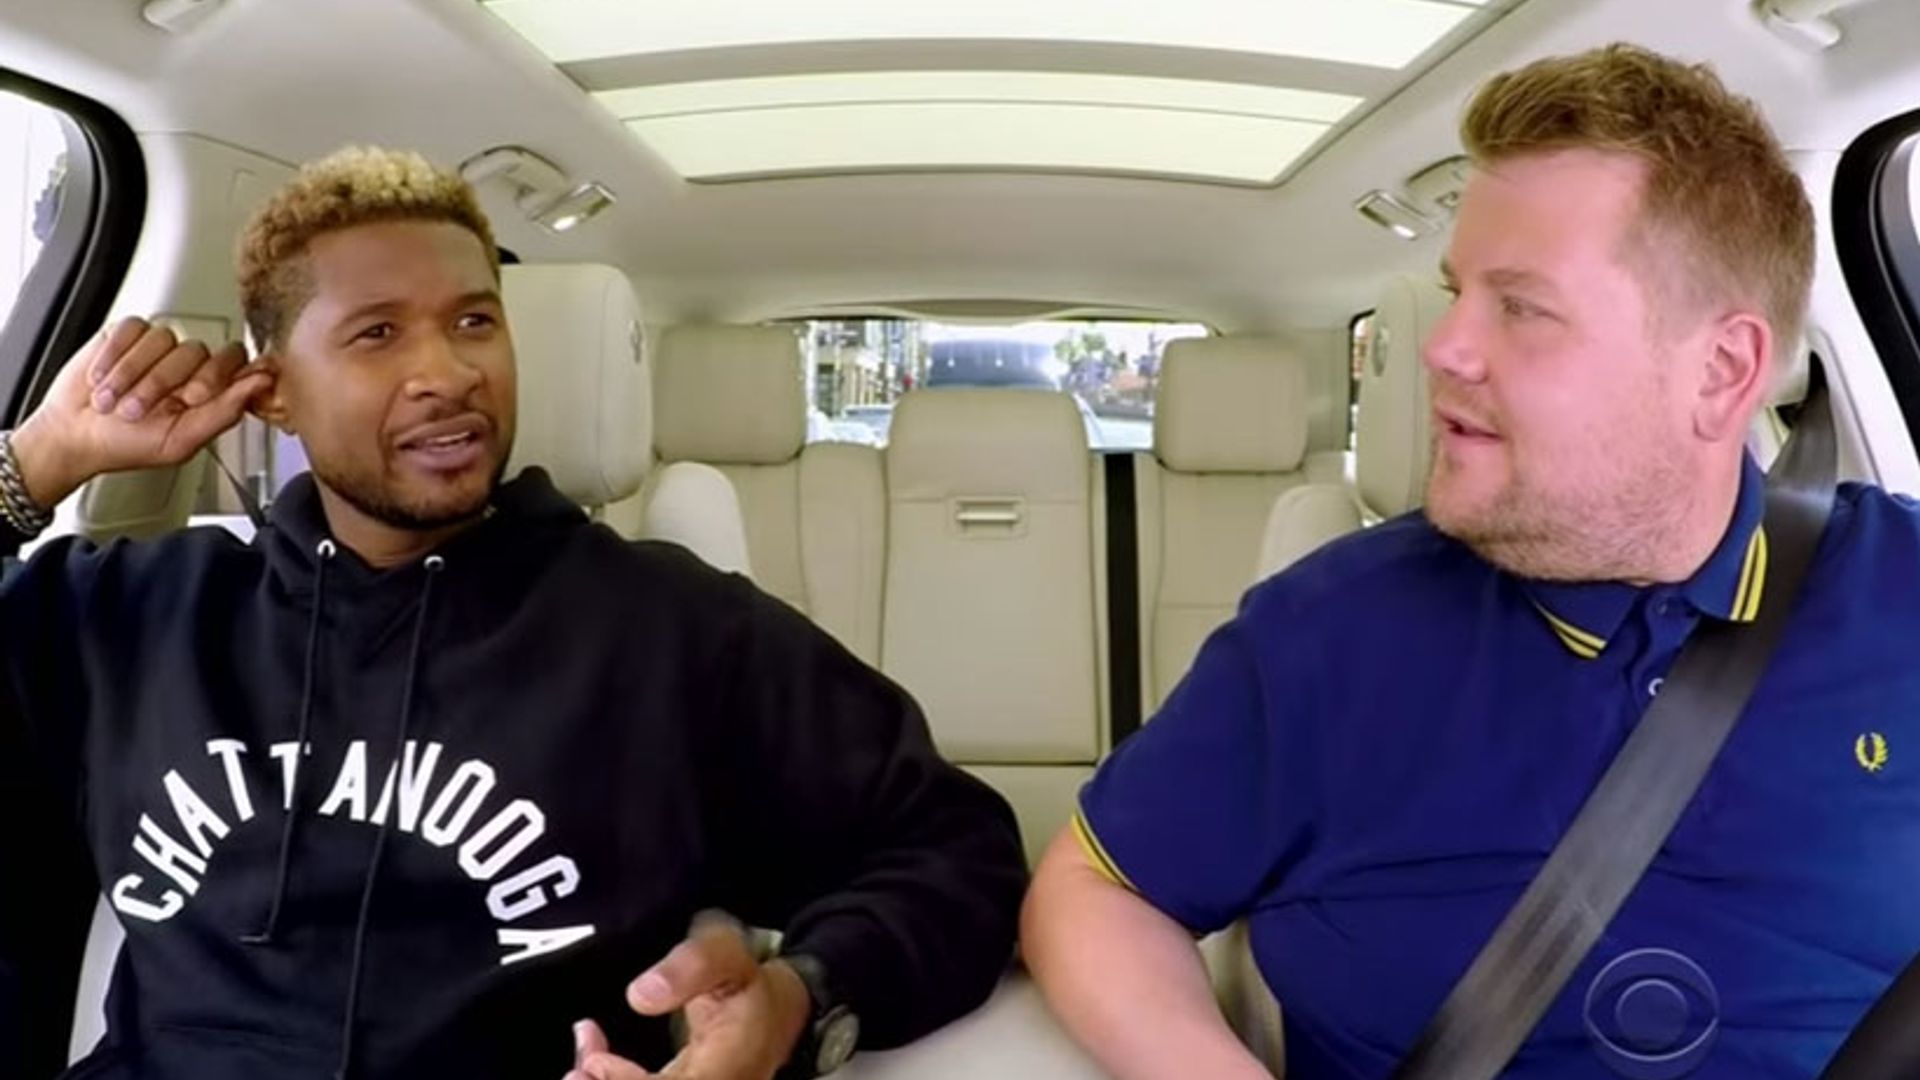 WATCH: Usher is the latest star to take part in James Corden's Carpool Karaoke